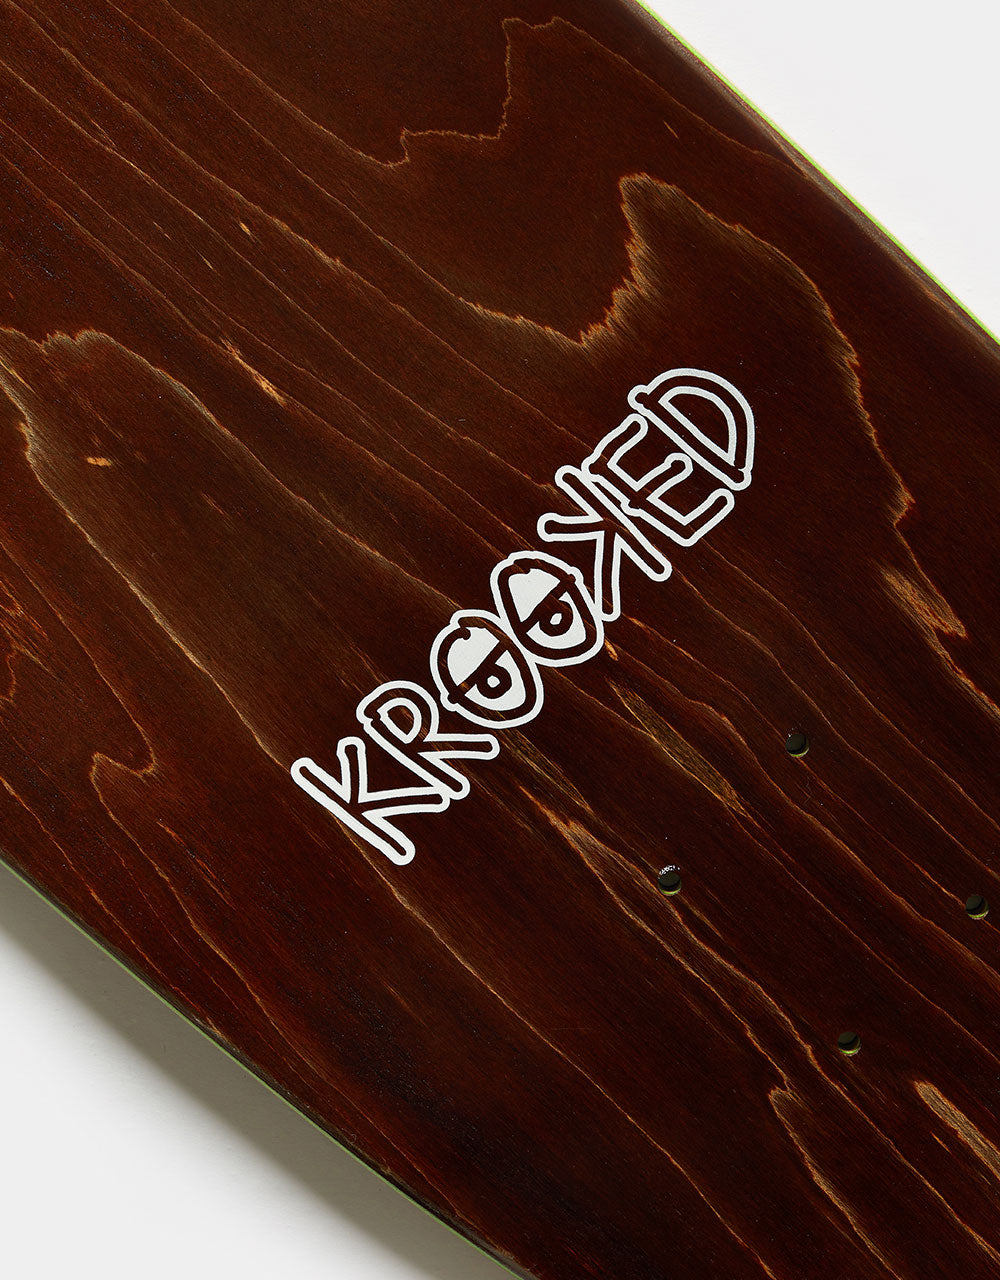 Krooked Team Klassic Skateboard Deck - 9.1"